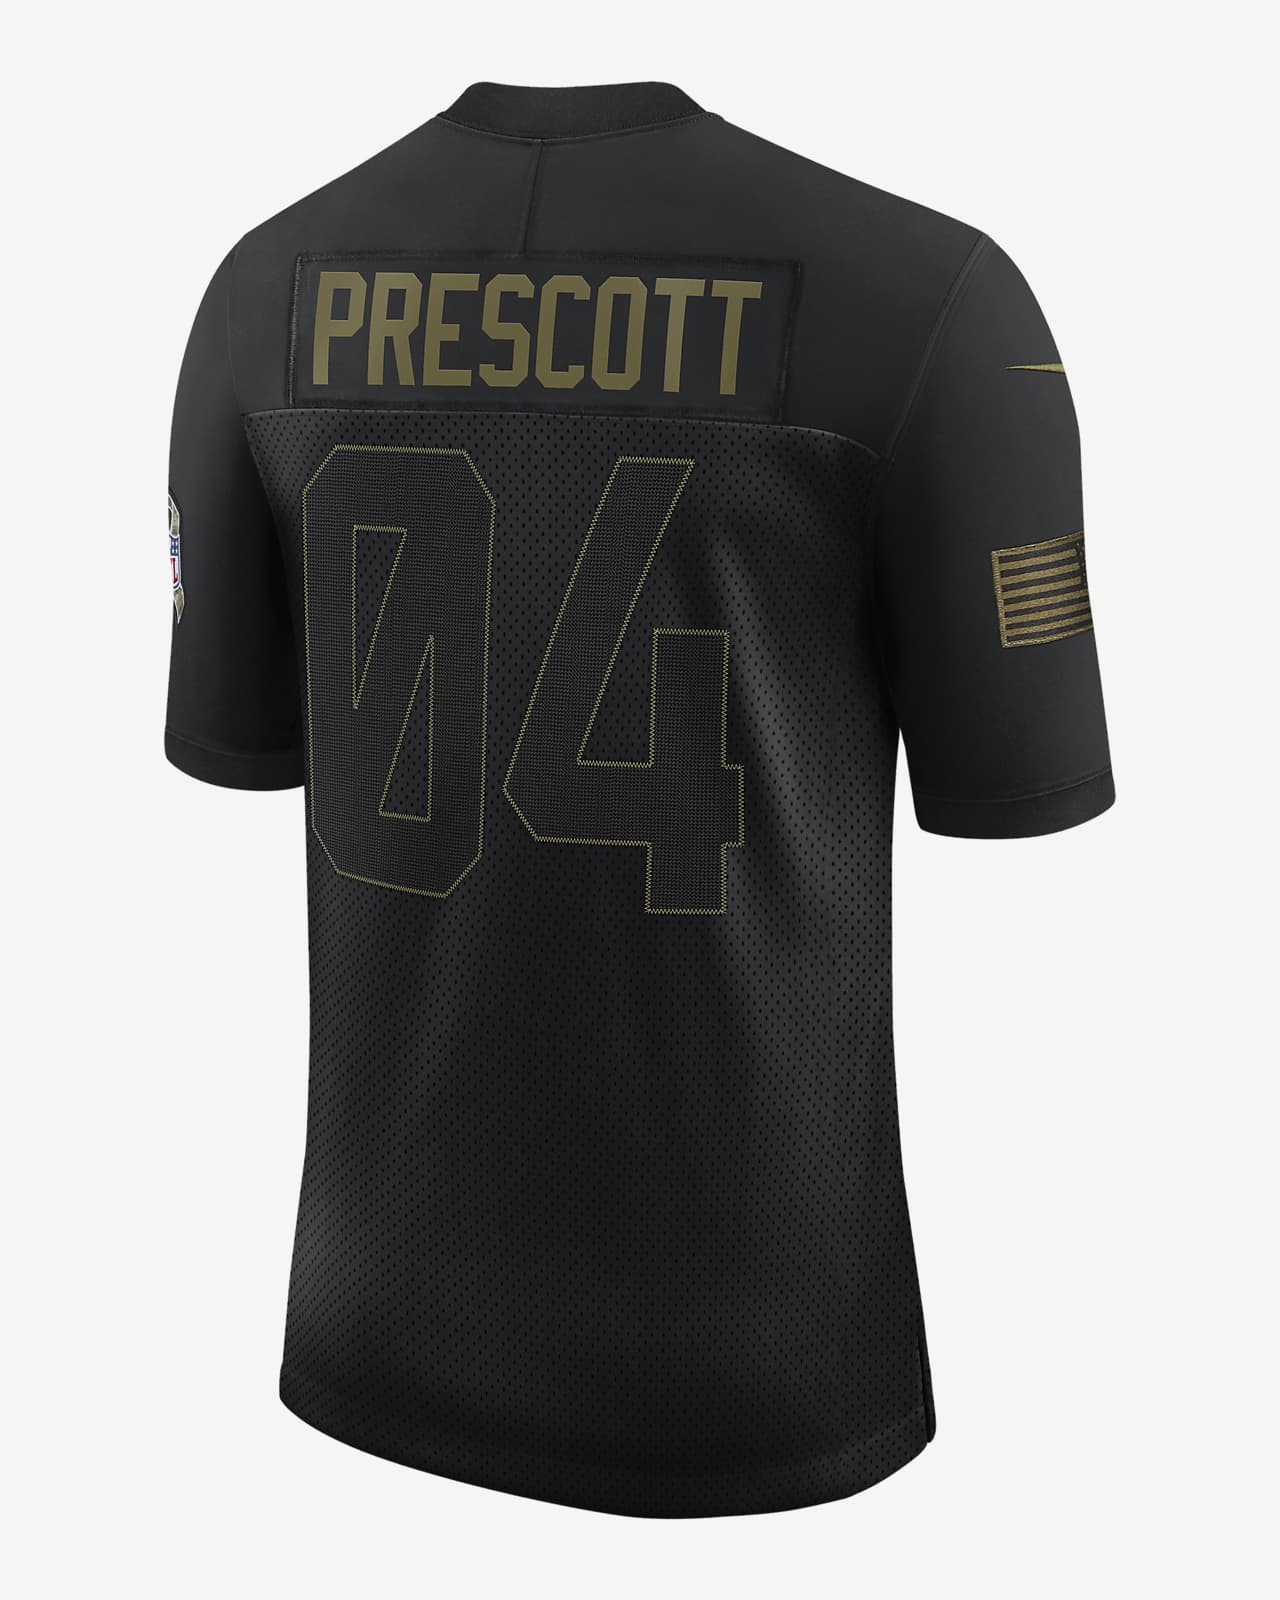 prescott cowboys jersey